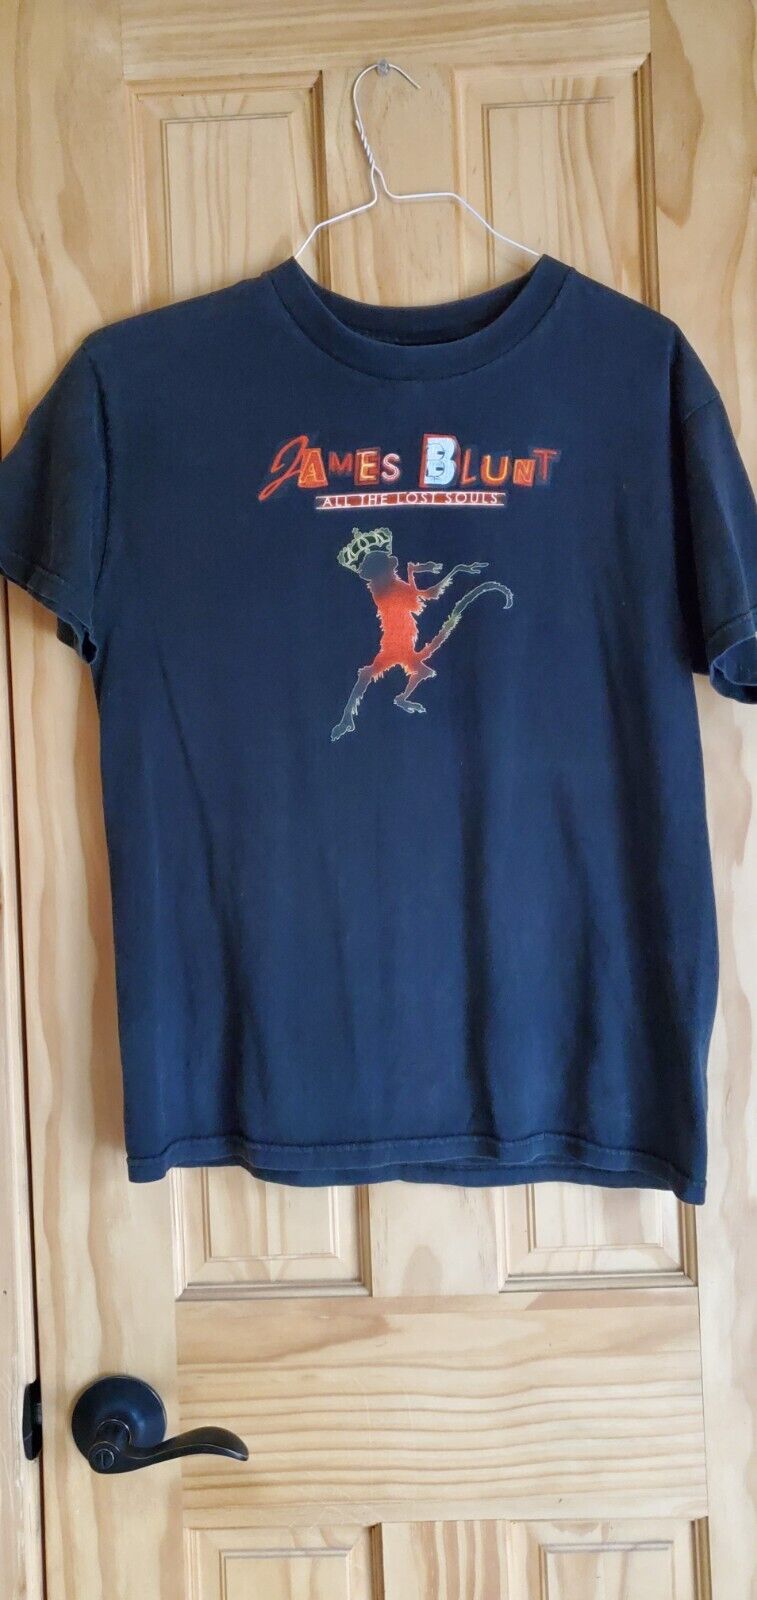 James Blunt 2008 World Tour Tee